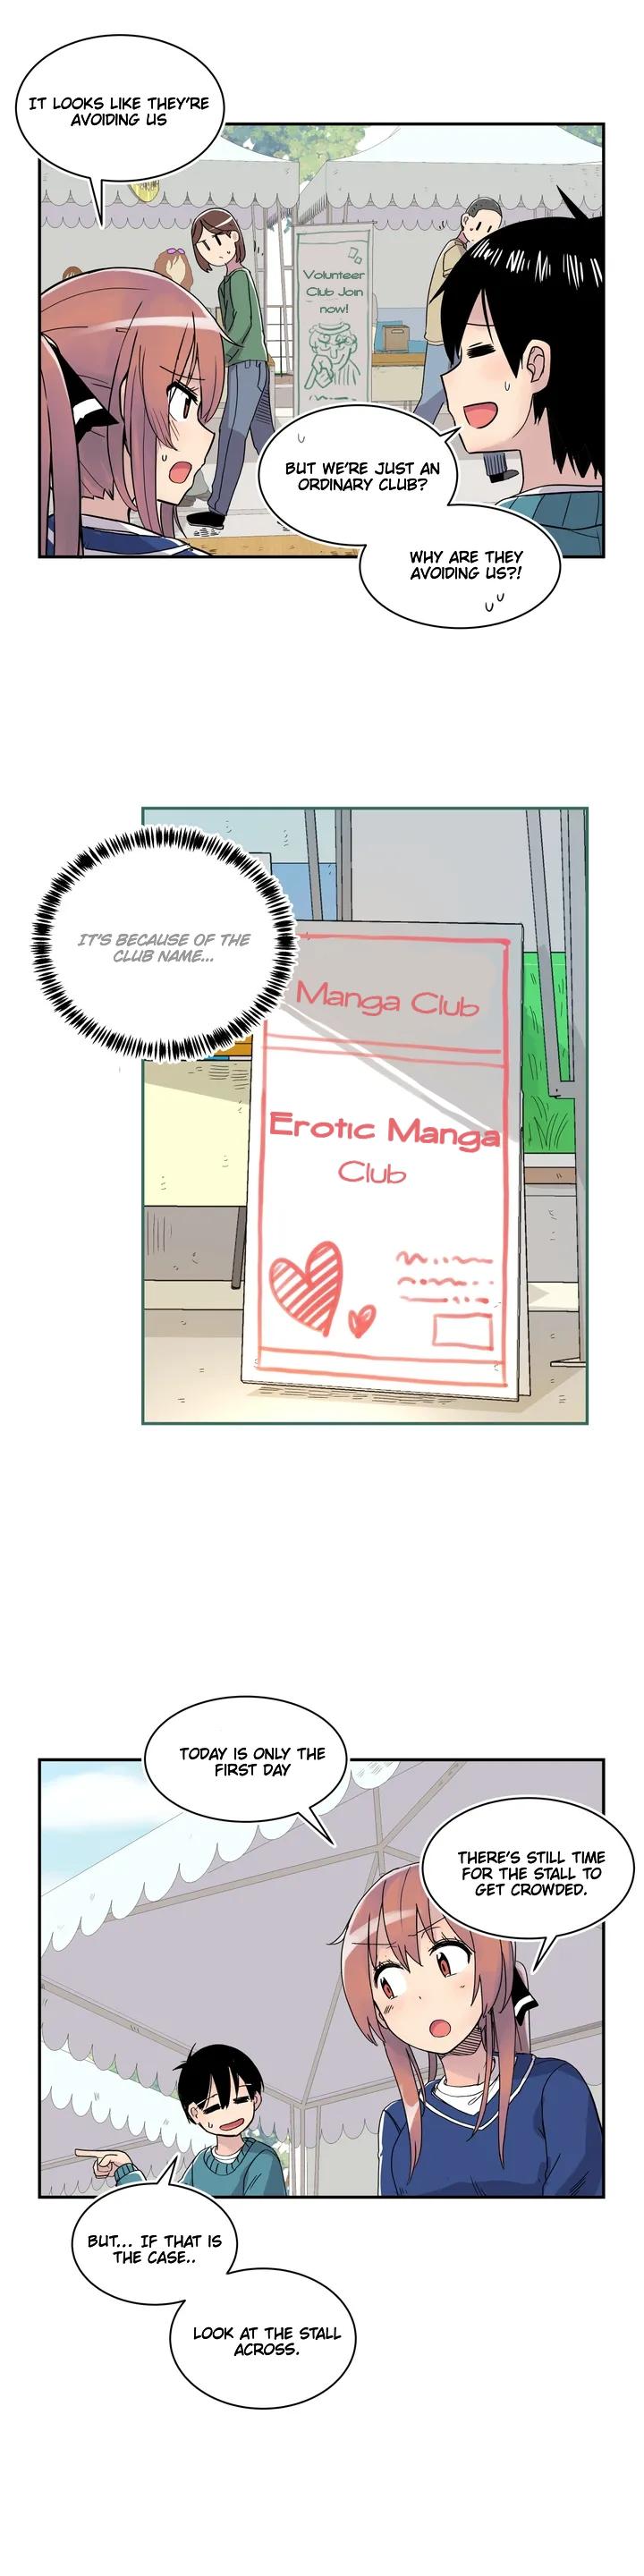 Erotic Manga Department! Chapter 2 - page 10